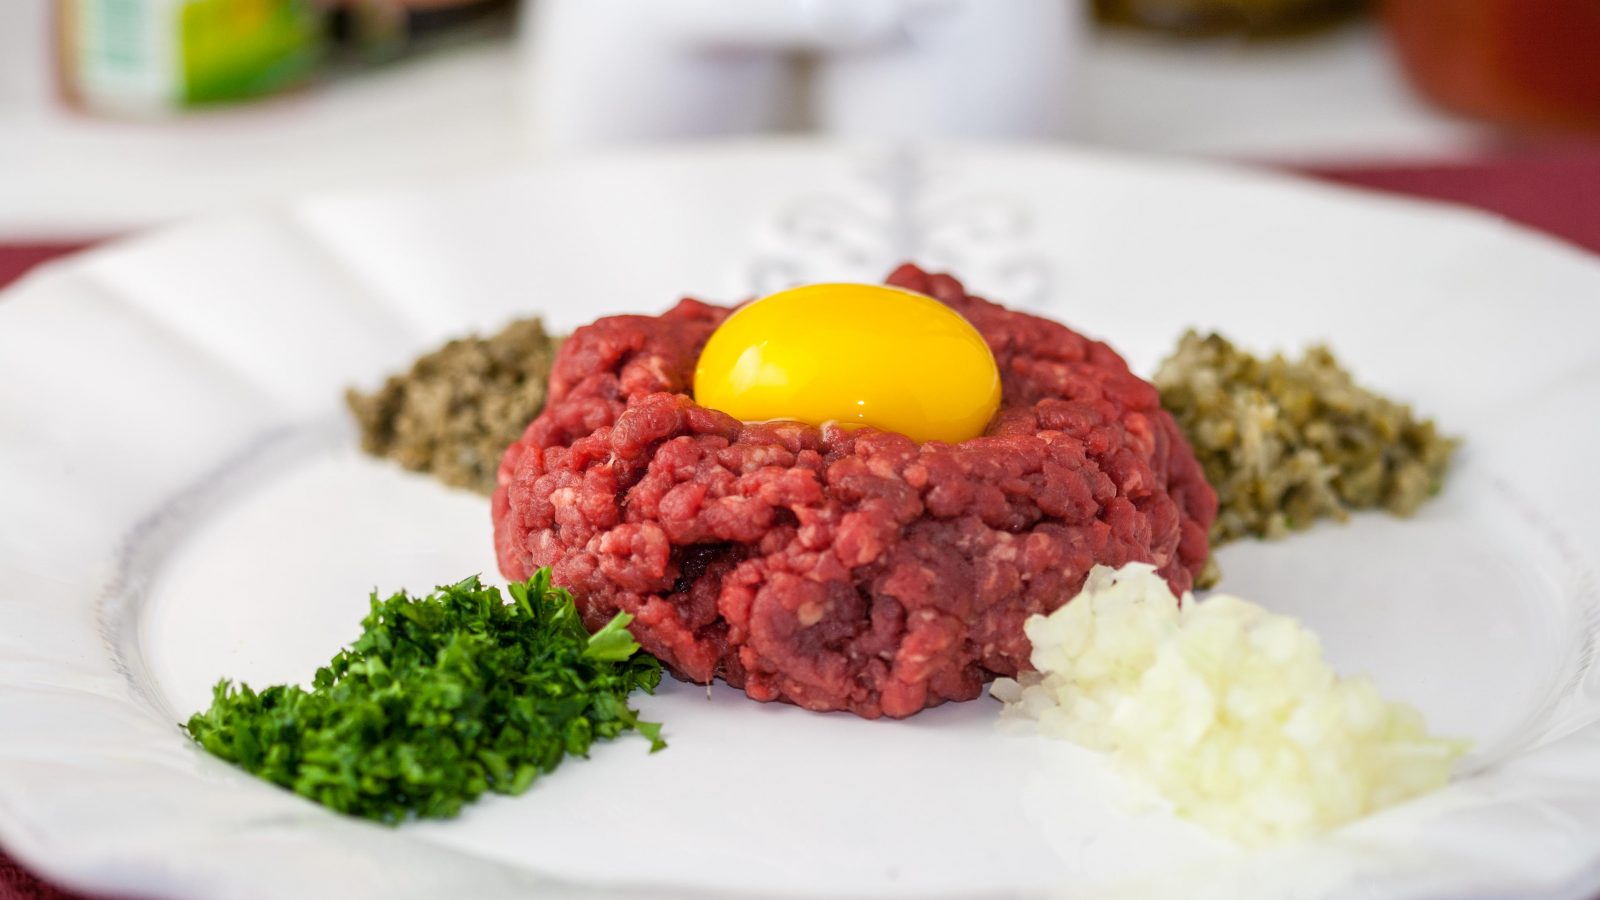 https://onlineculinaryschool.net/wp-content/uploads/2018/11/online_culinary_school_steak_tartare-1.jpg